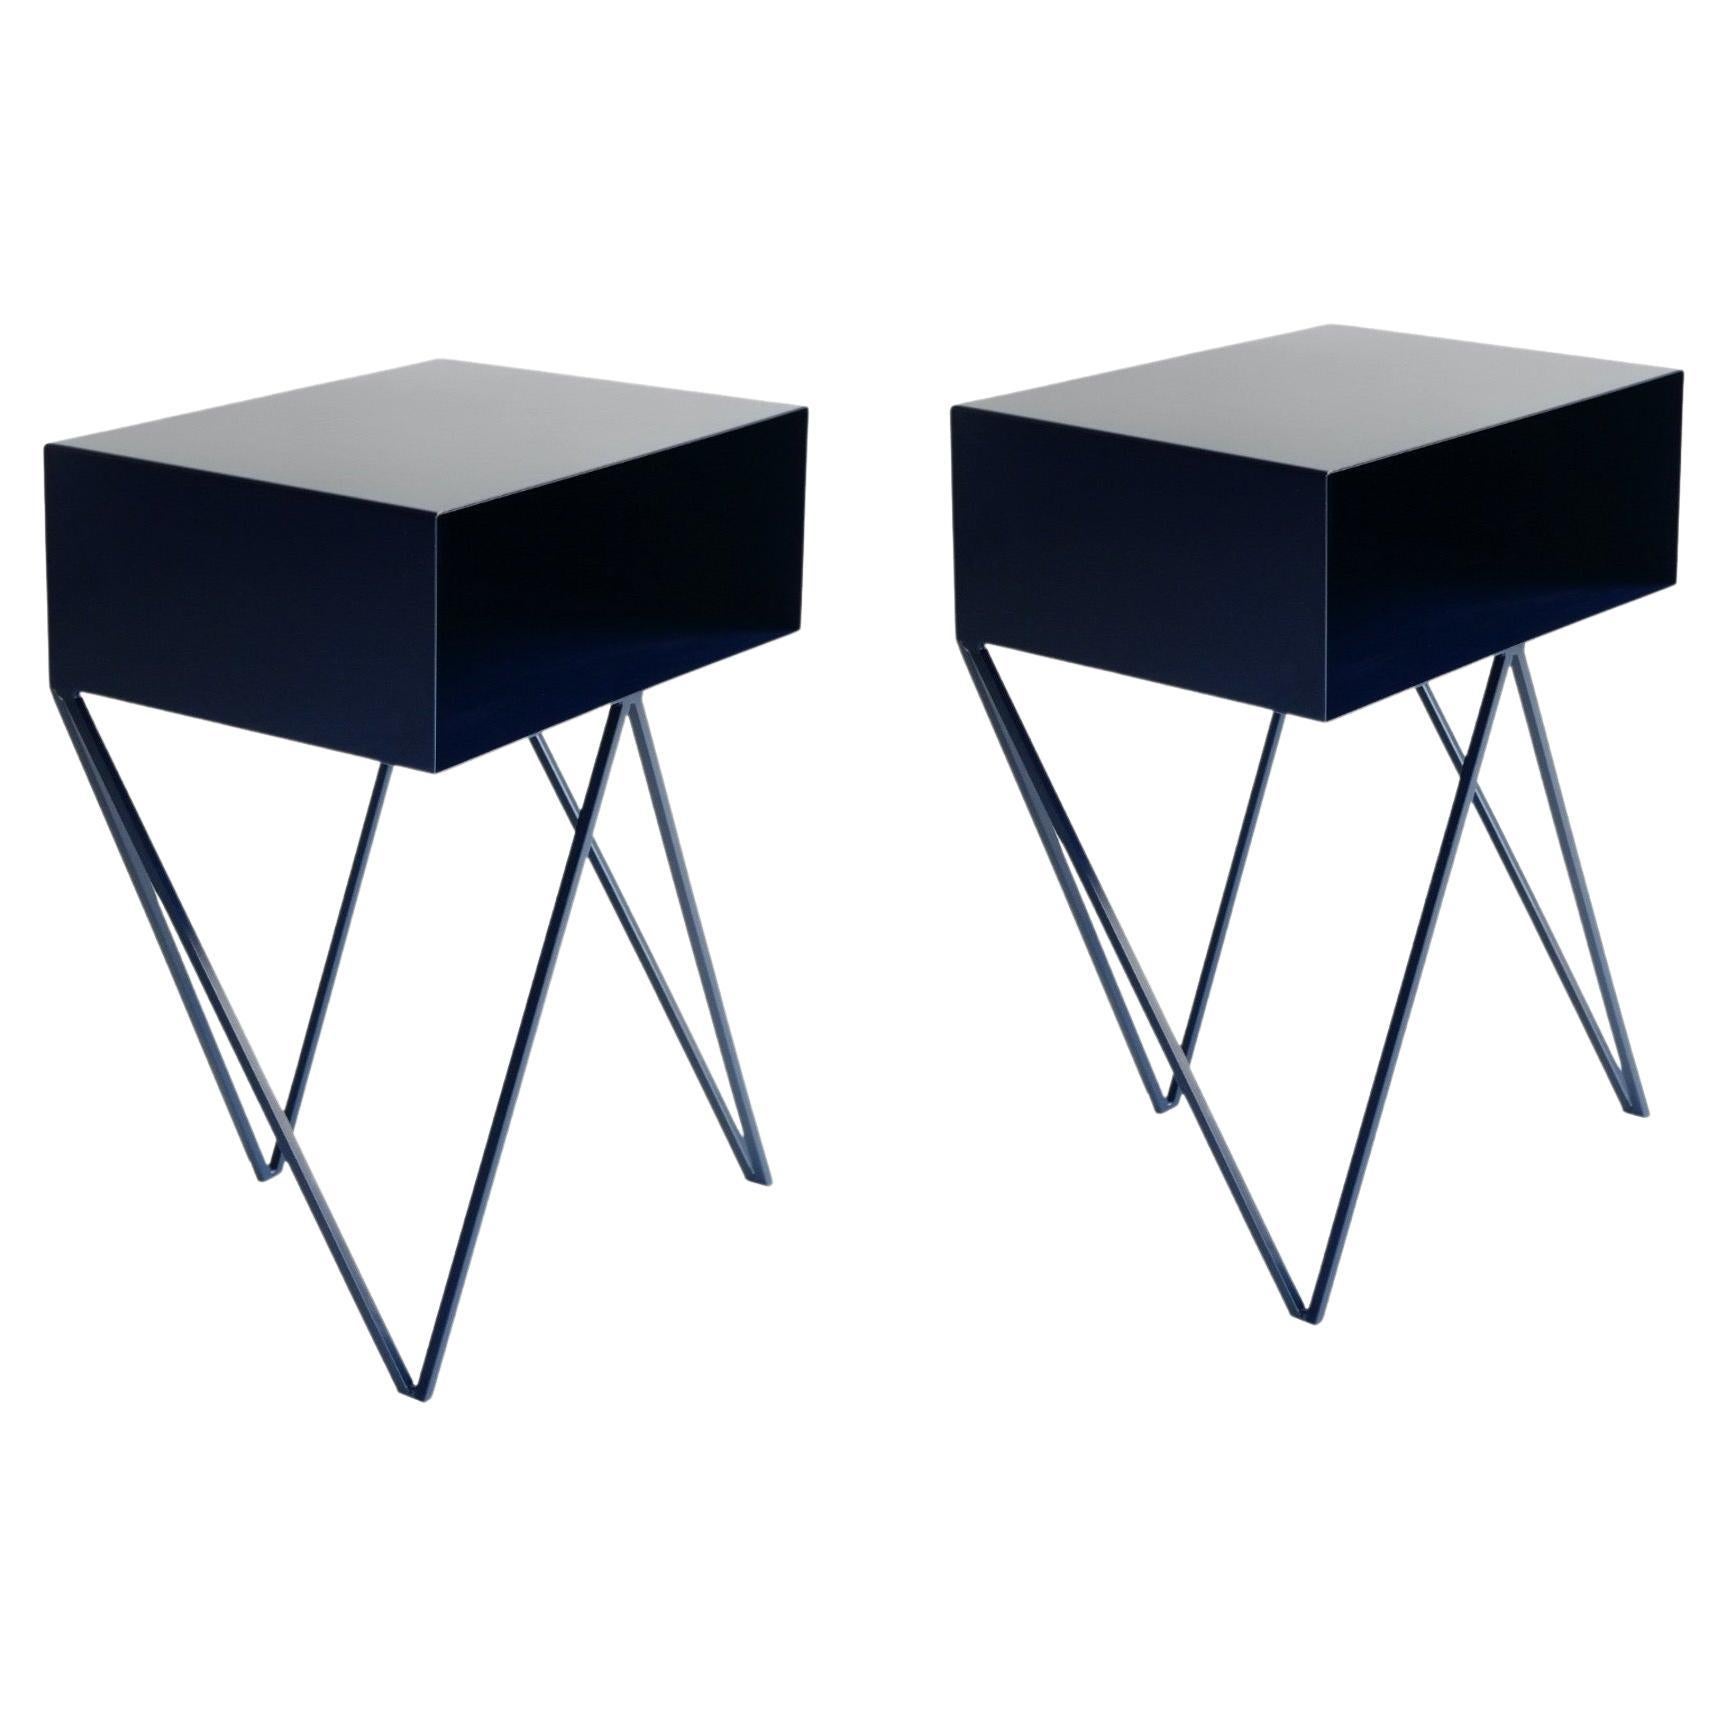 Pair of Dark Blue Steel Robot Bedside Tables - Nightstands For Sale